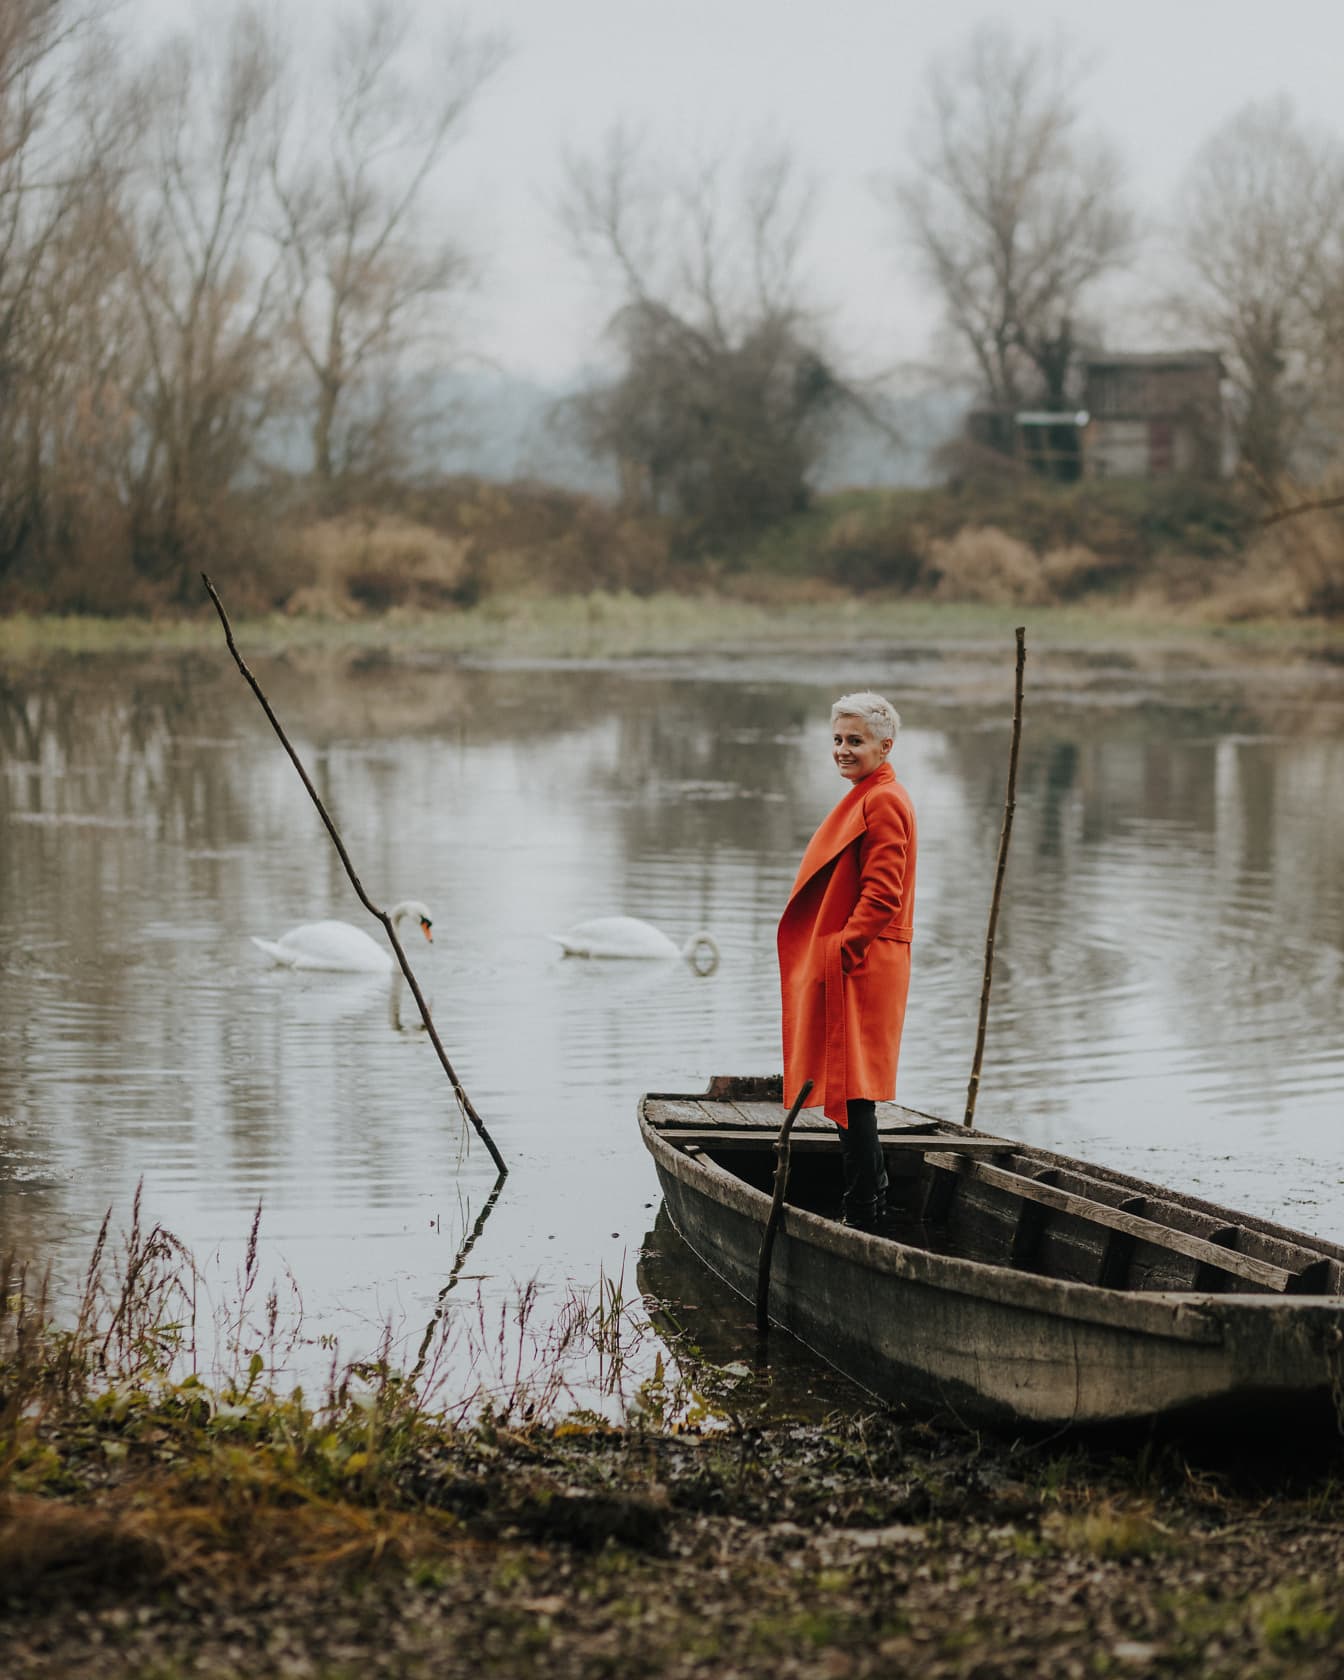 Pen kvinne som står i båt i oransjegul frakk